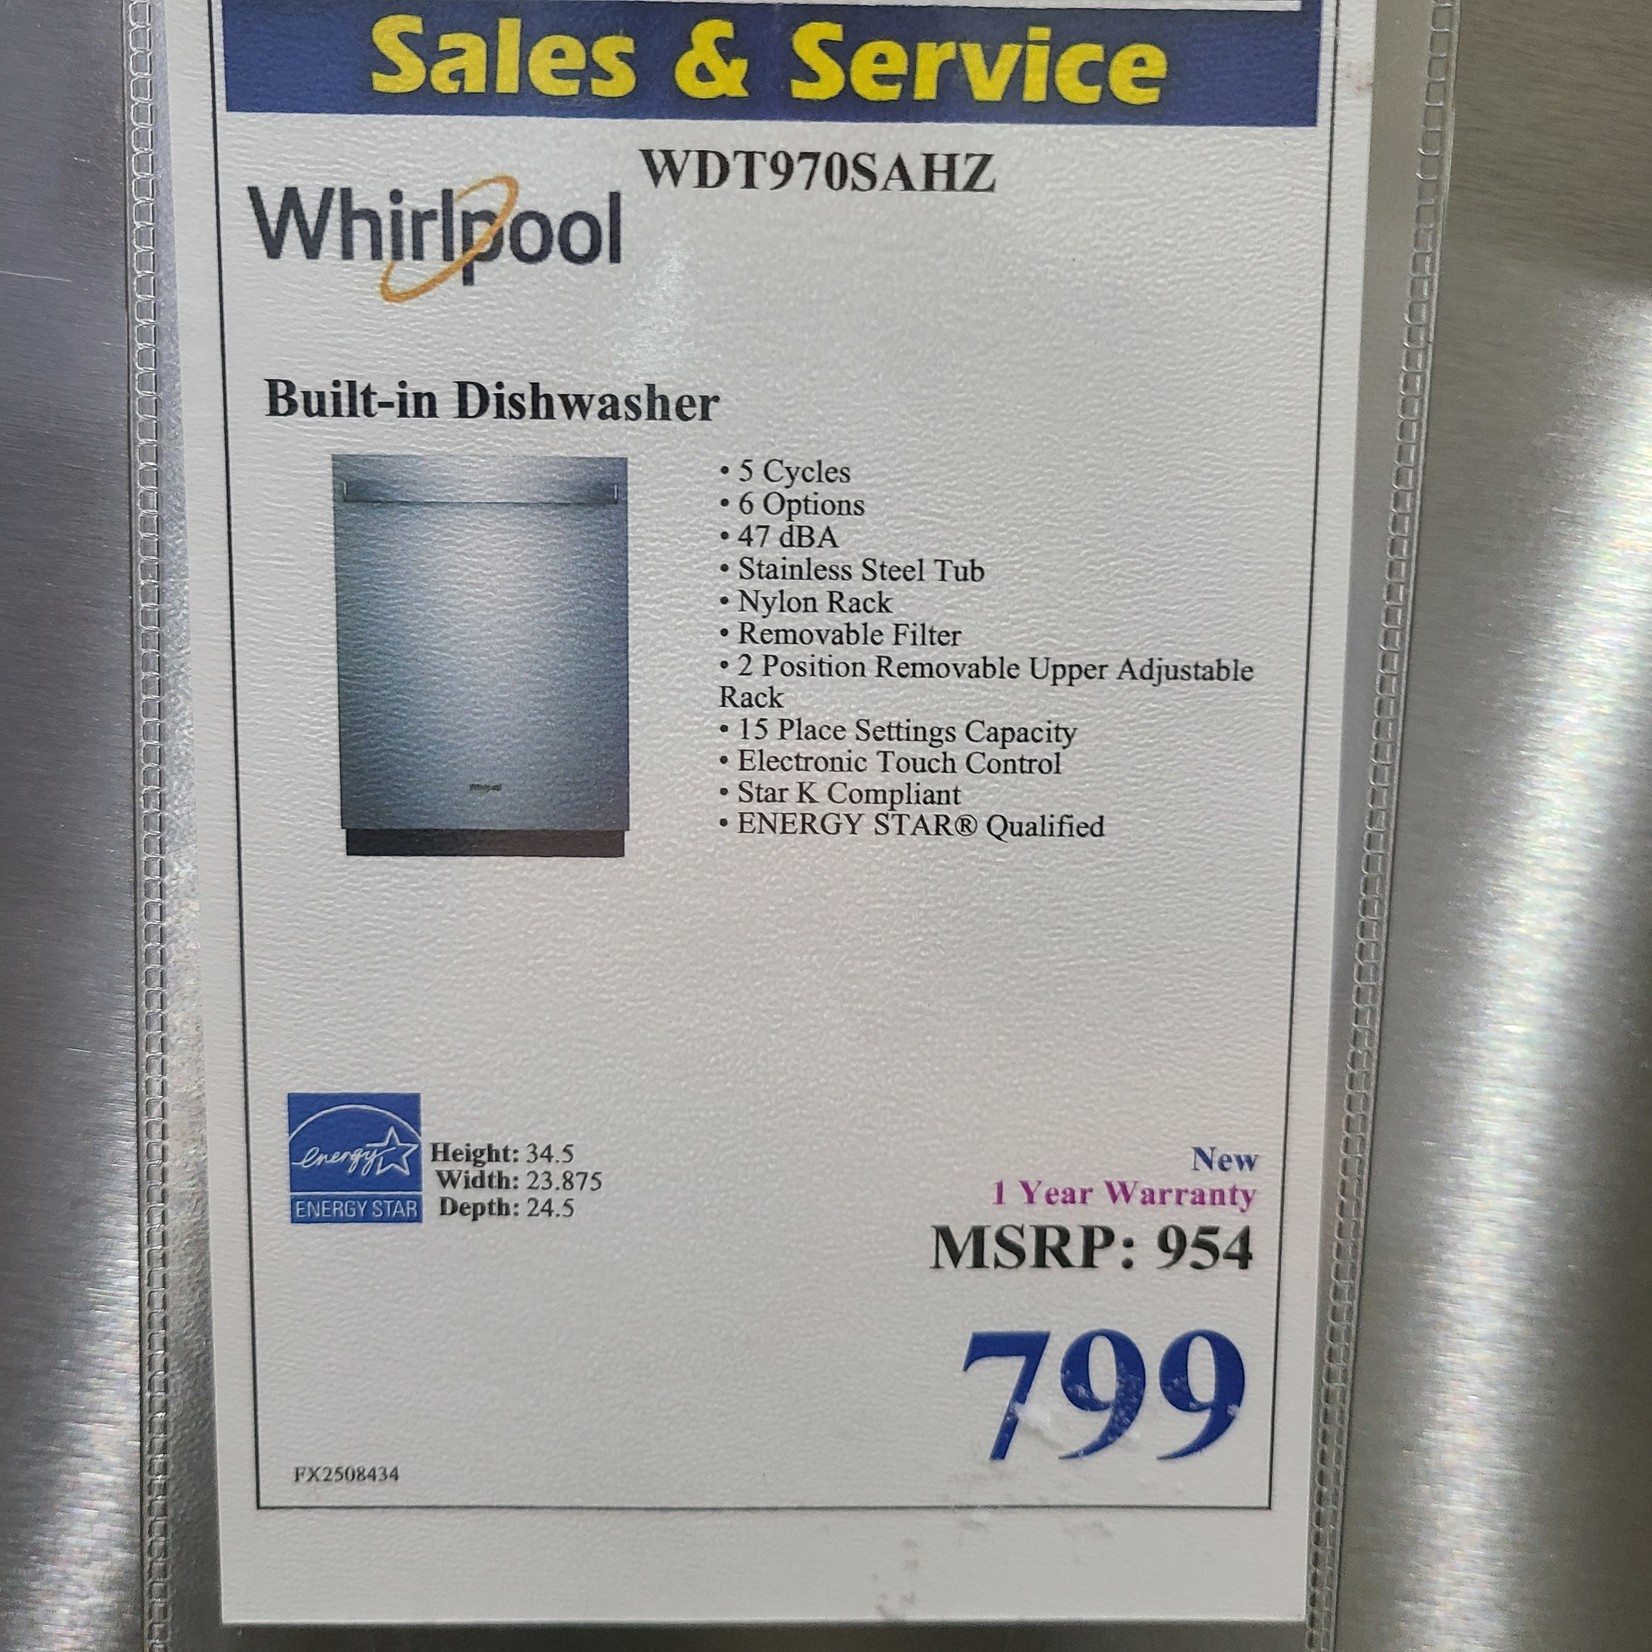 Whirlpool Whirlpool Built-in Dishwasher WDT970SAHZ - FX2508434